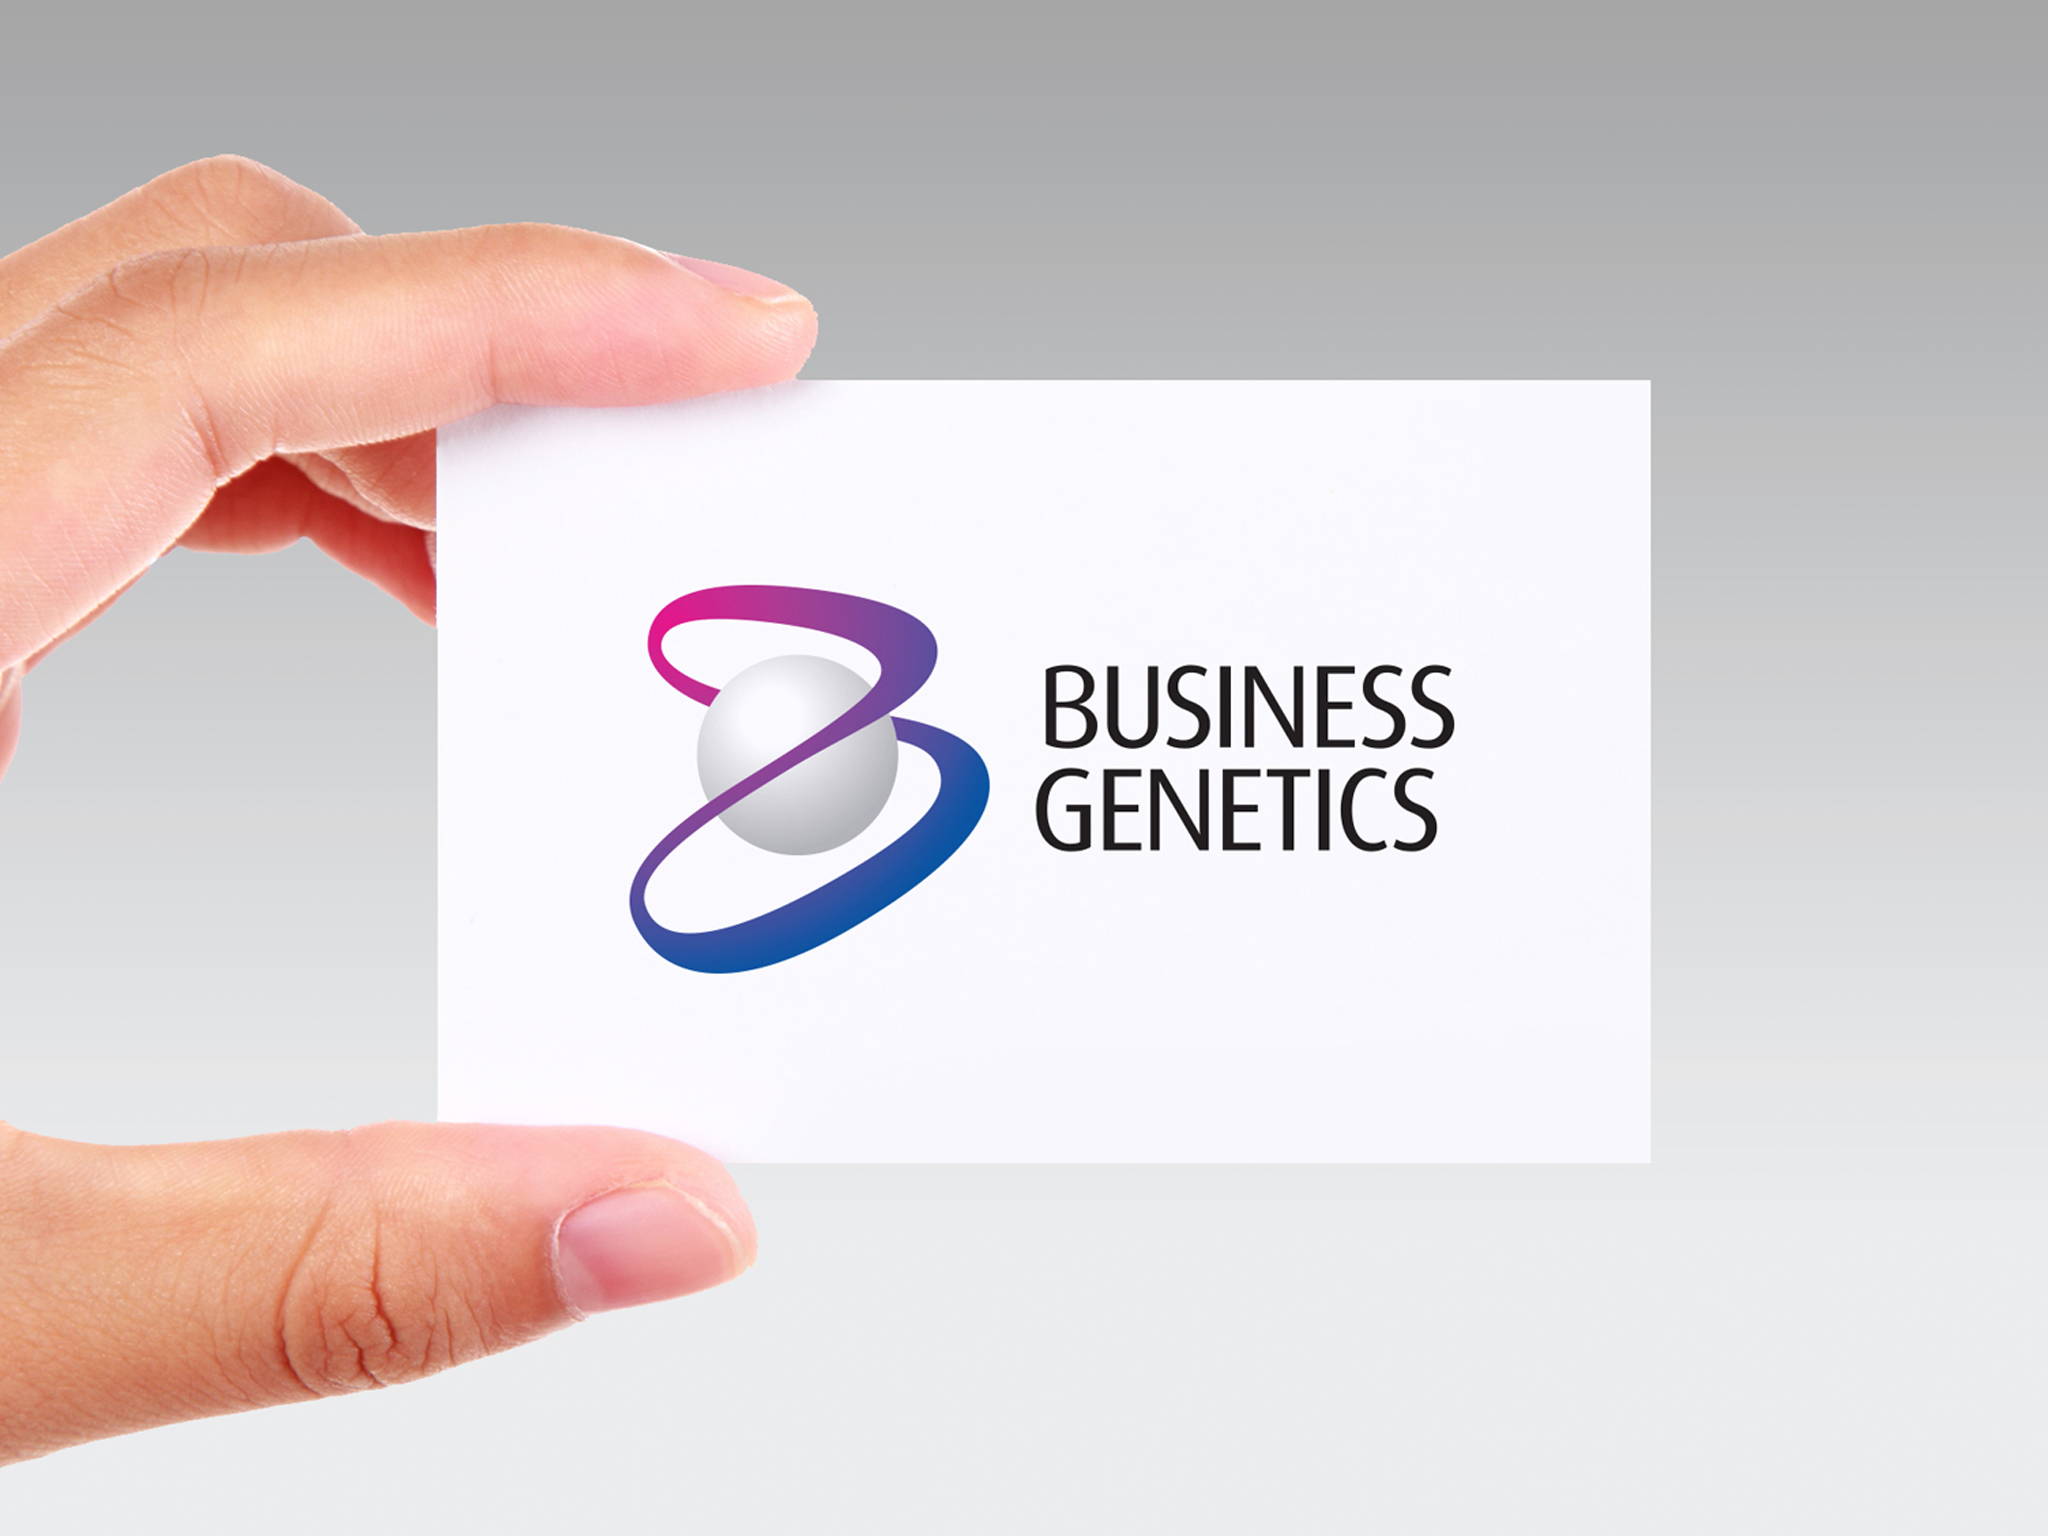 Business Genetics Group Dubai